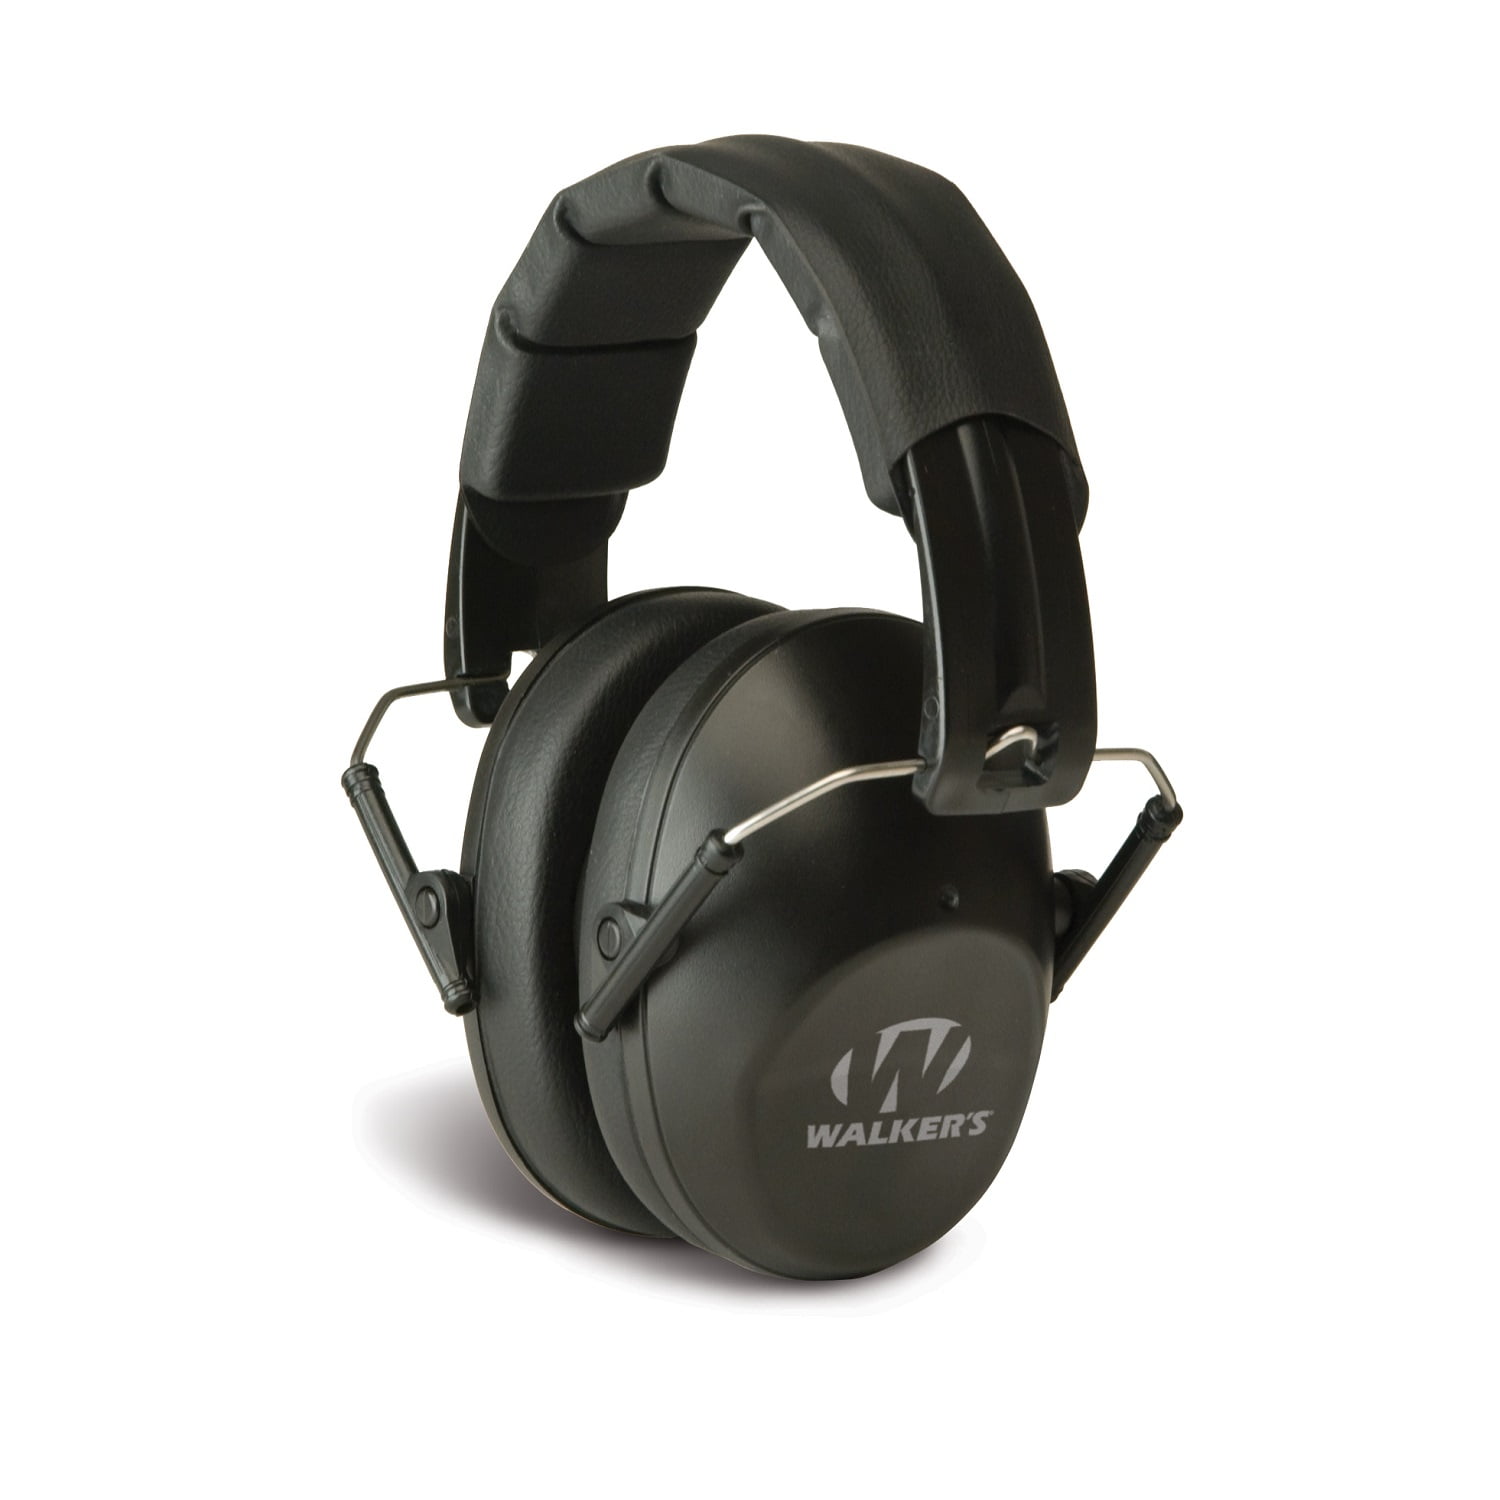 Walkers Game Ear Pro Low Profile Folding Muff Earmuff 31 Db Ear Protection, Black